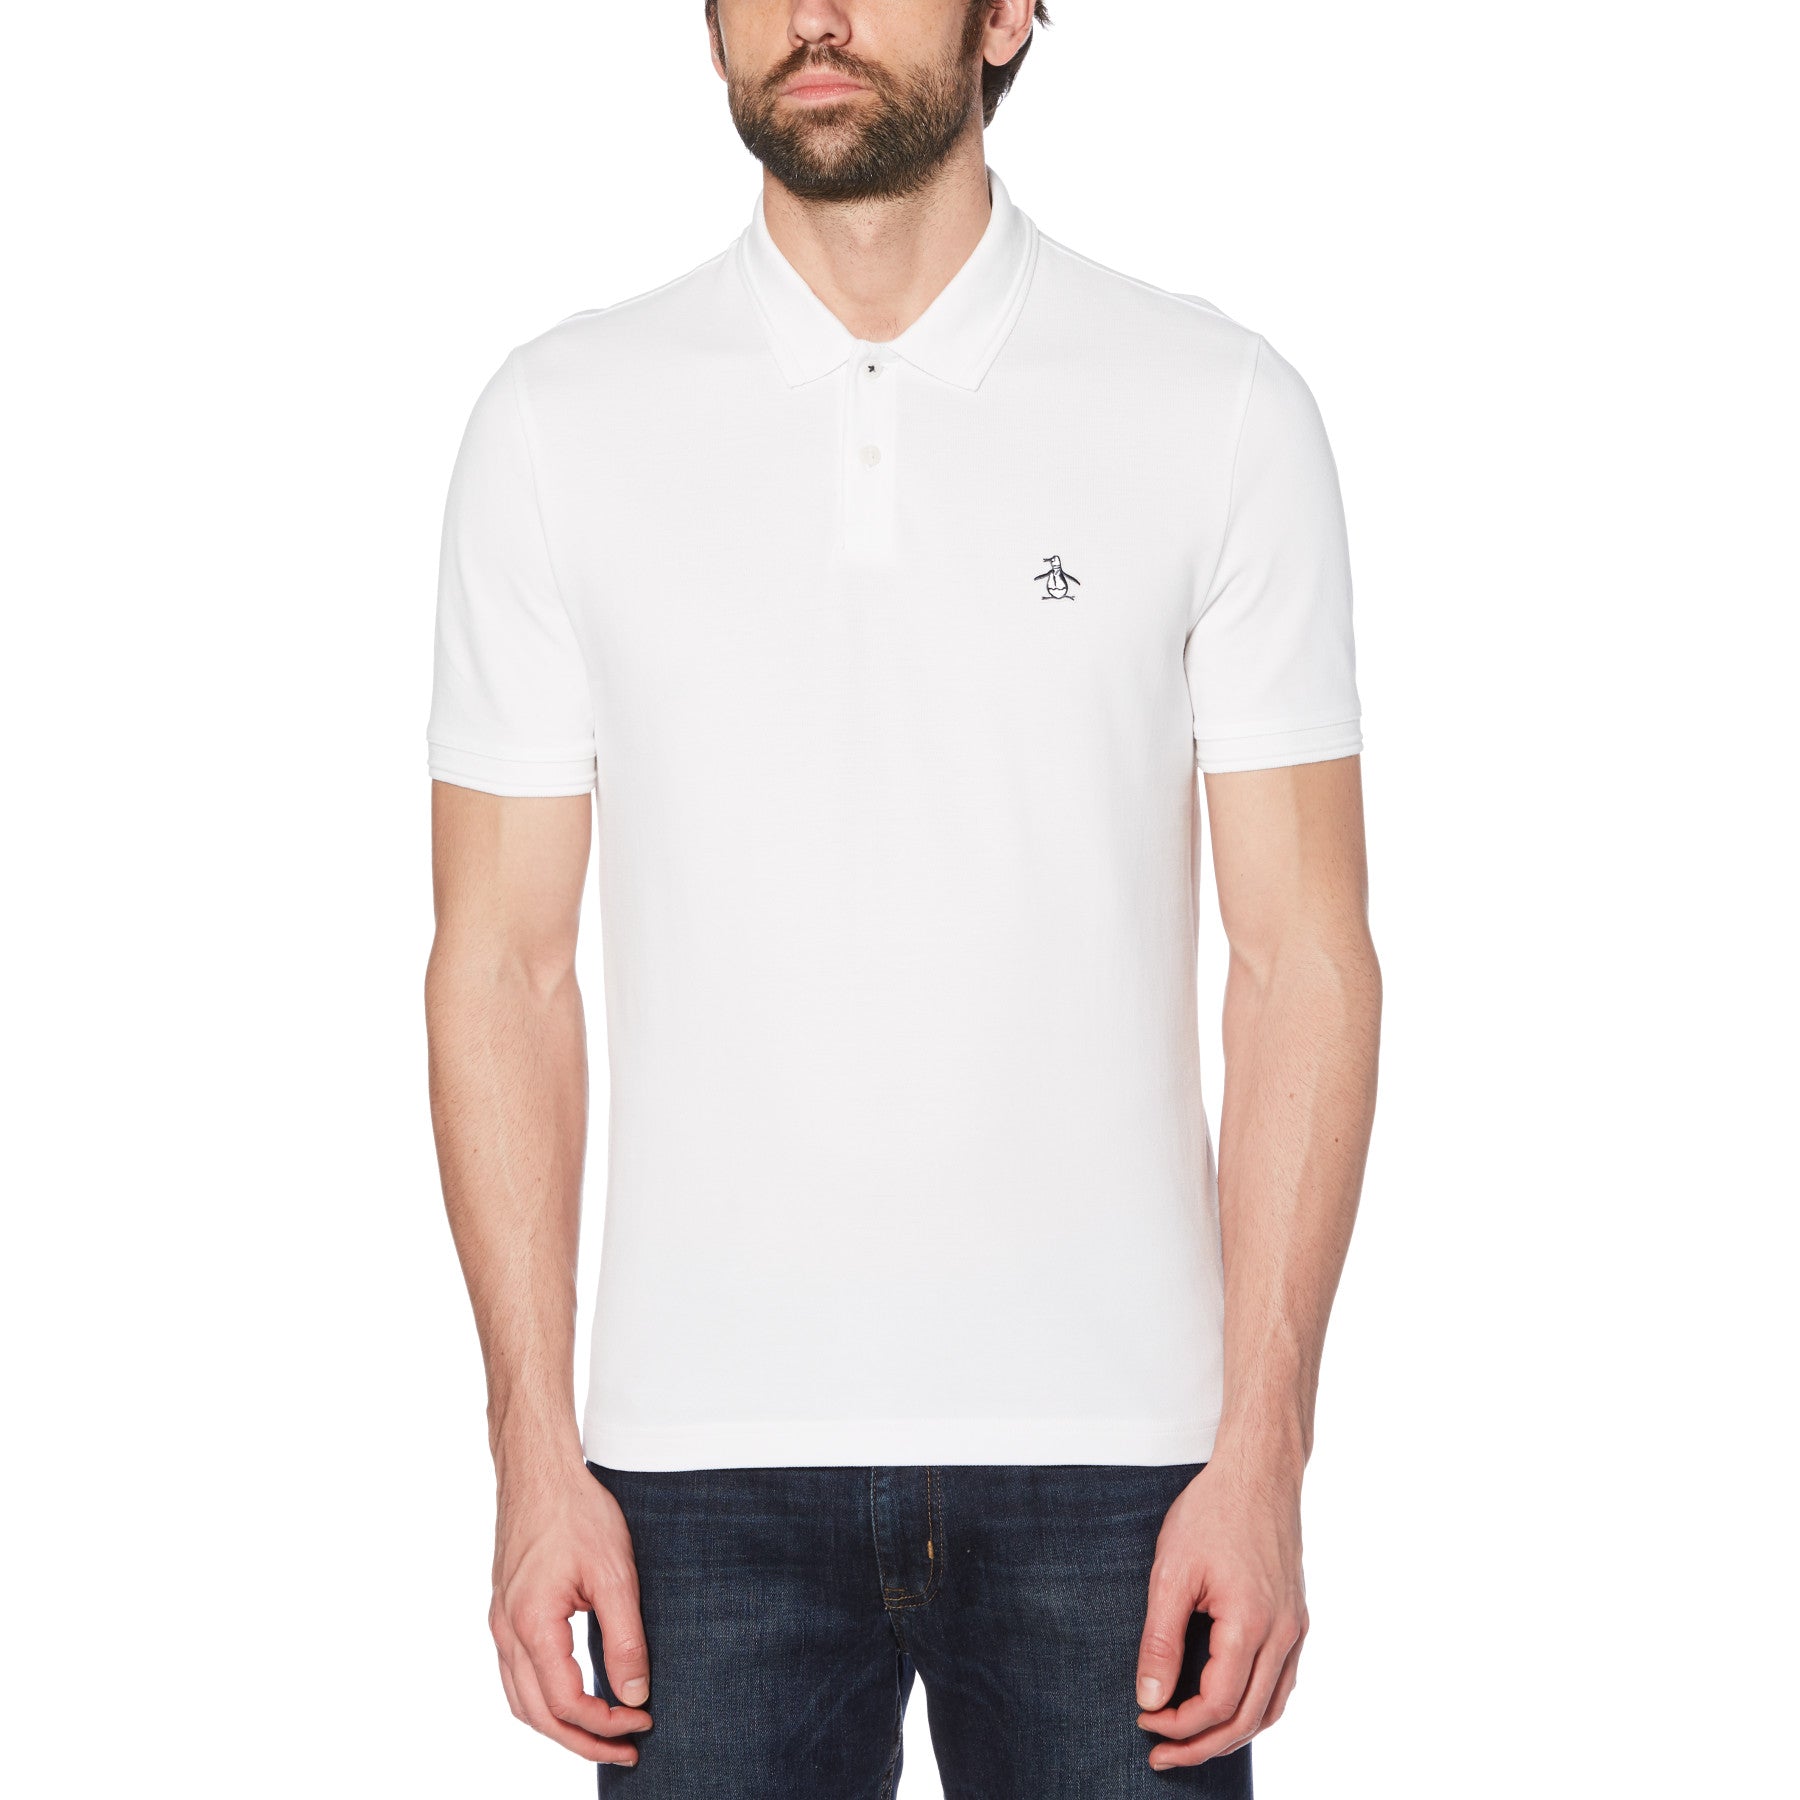 View Raised Rib Polo Shirt In Bright White information